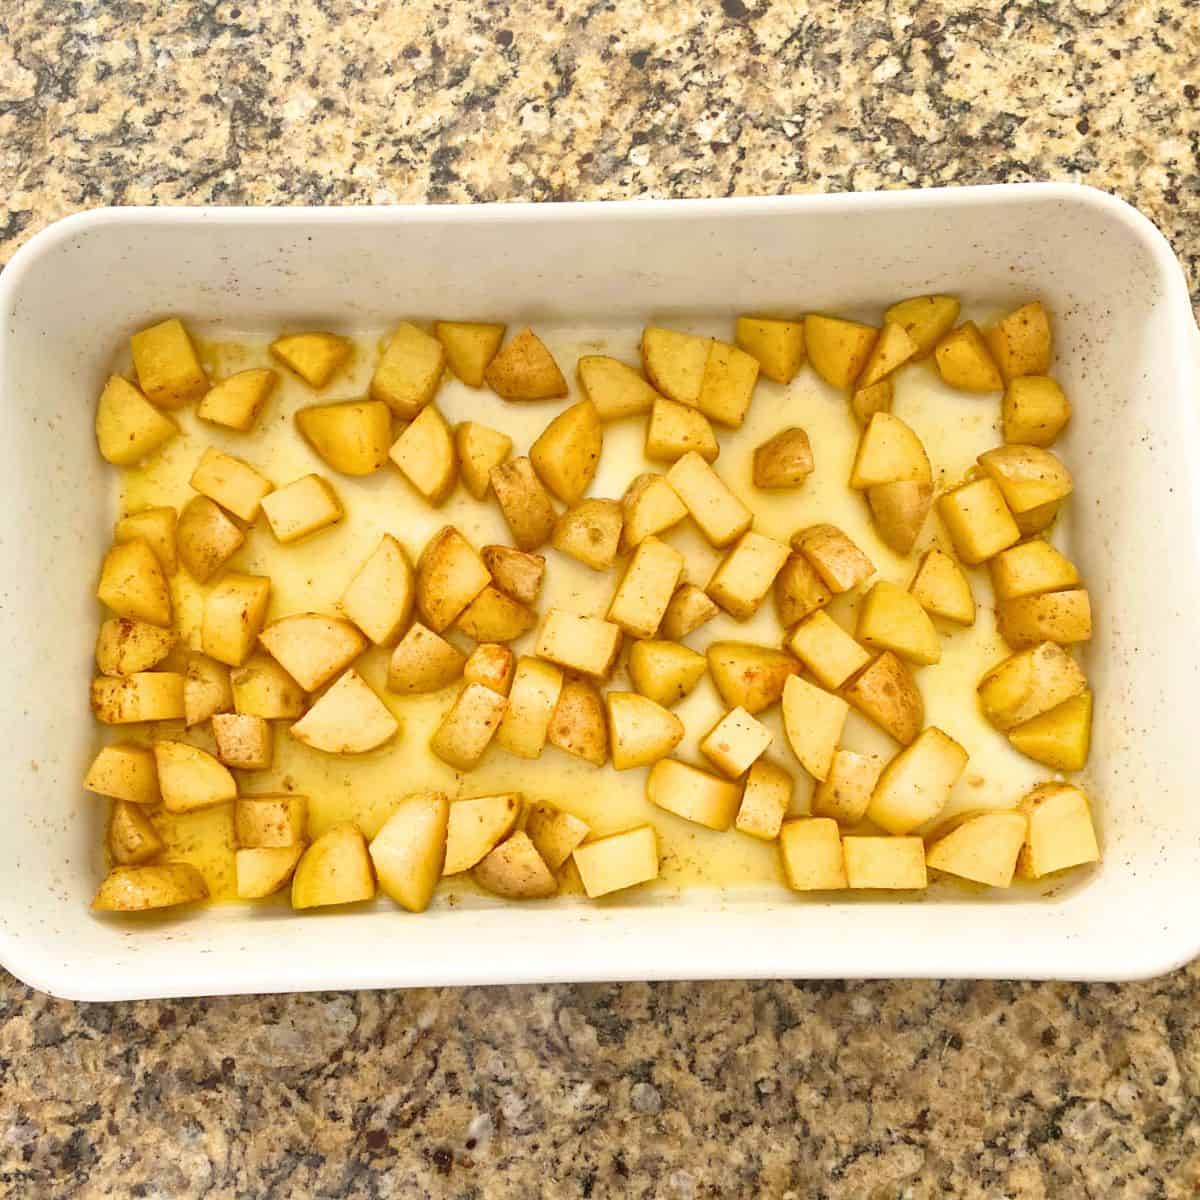 Raw buttered and seasoned yellow potatoes in a Pillivuyt porcelain rectangular roaster pan